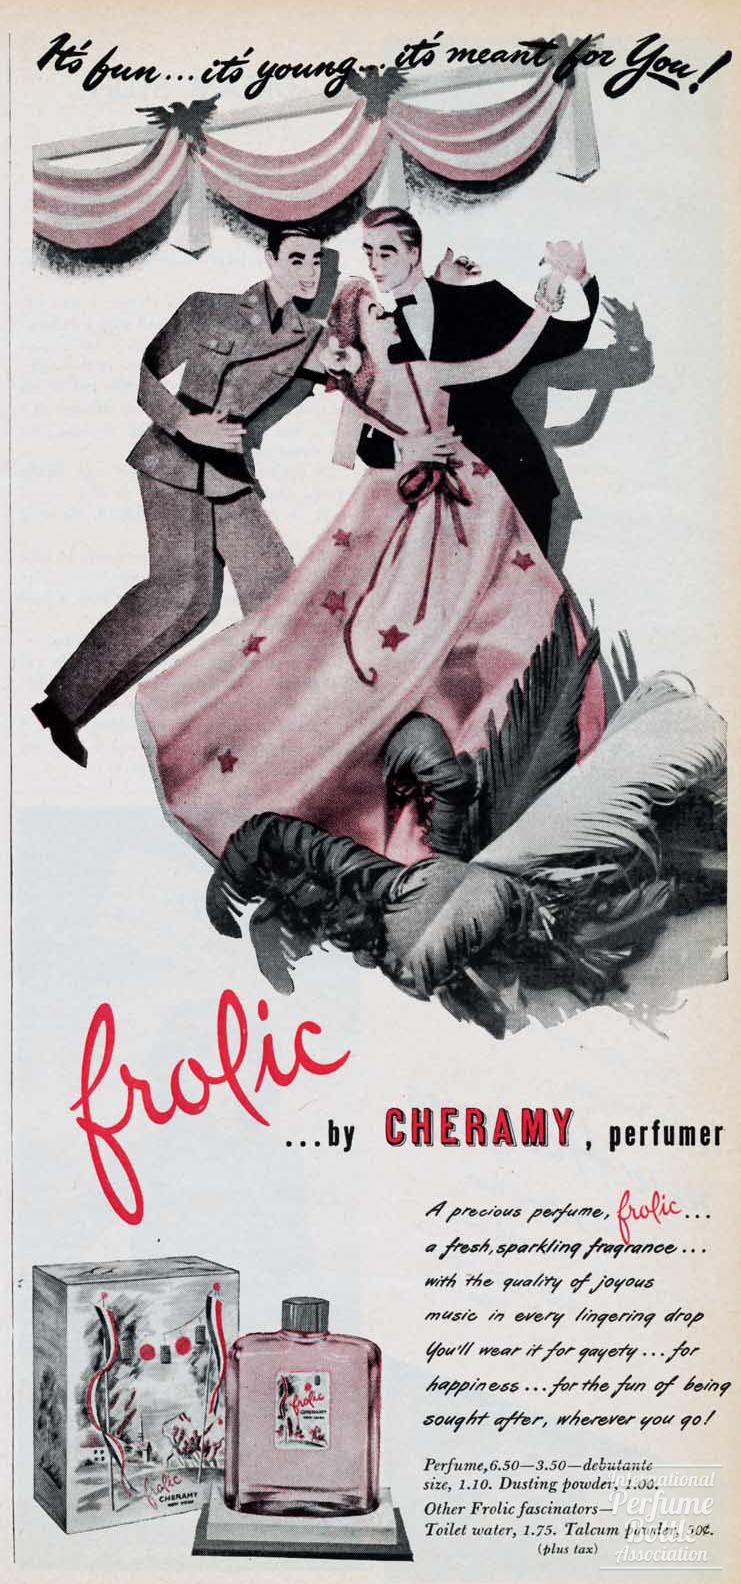 "Frolic" by Cheramy Advertisement - 1944